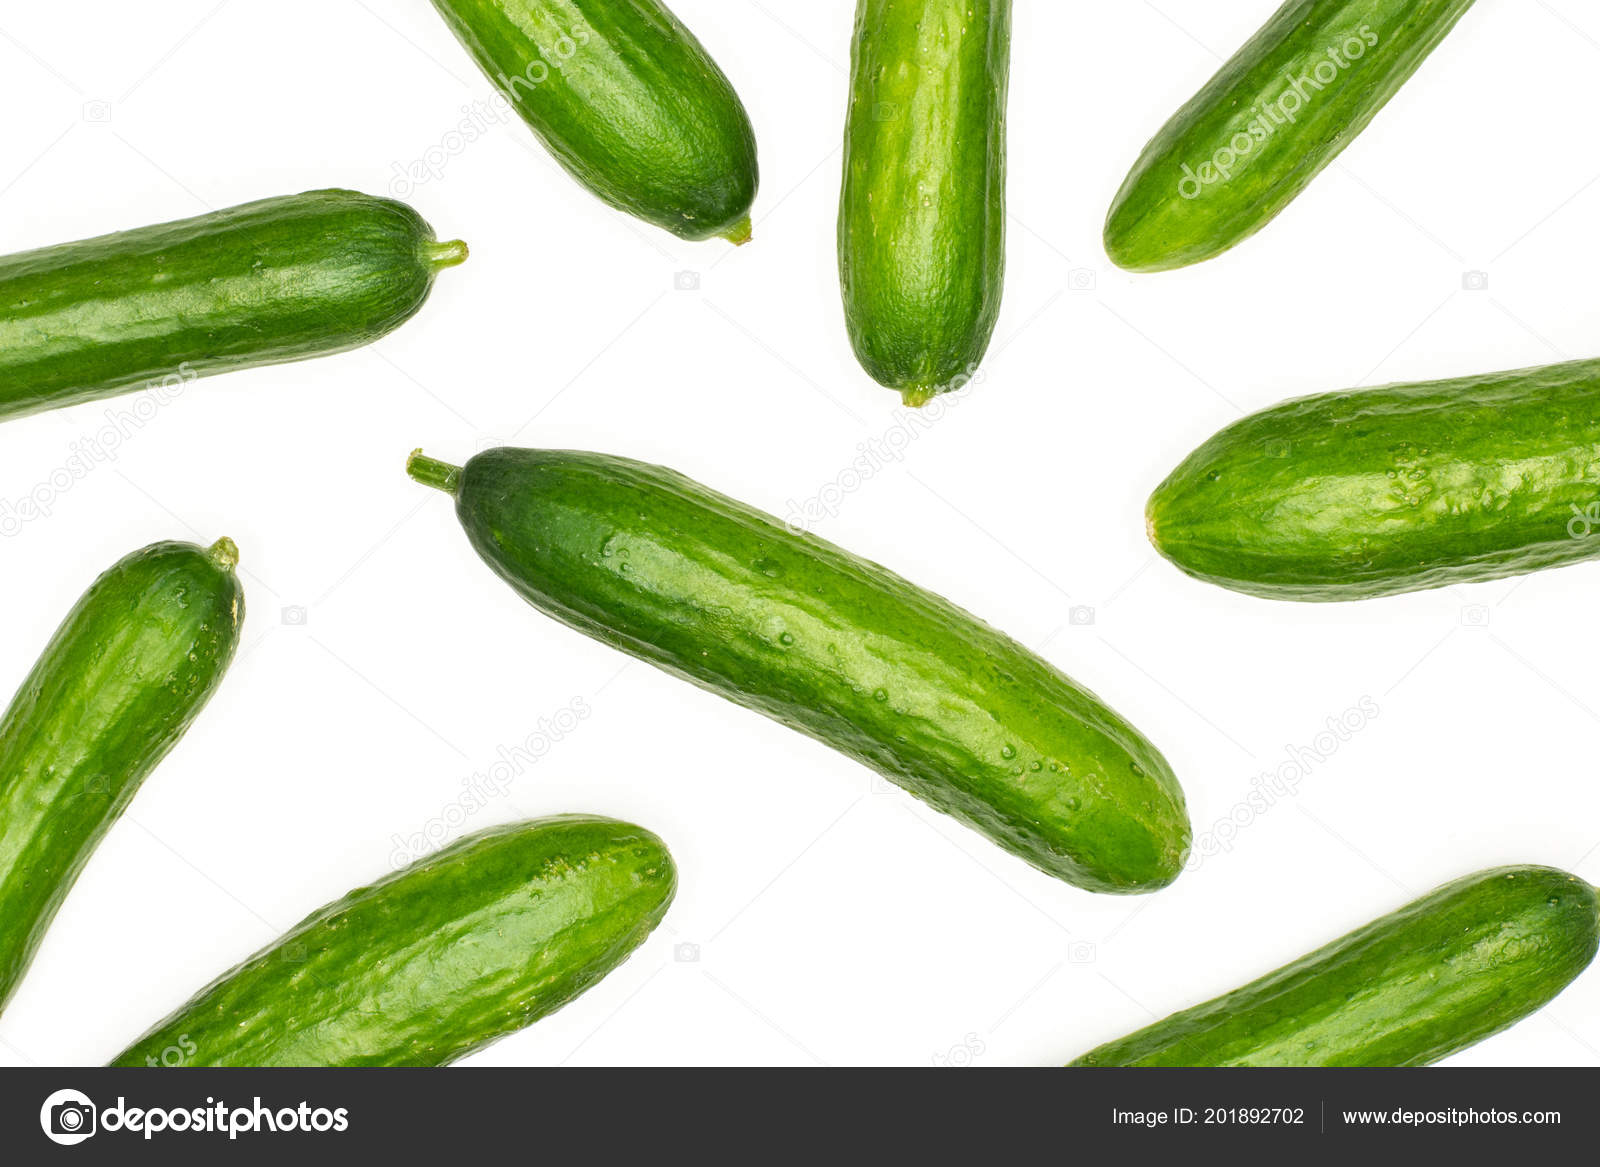 https://st4.depositphotos.com/14836424/20189/i/1600/depositphotos_201892702-stock-photo-fresh-mini-cucumbers-flatlay-isolated.jpg